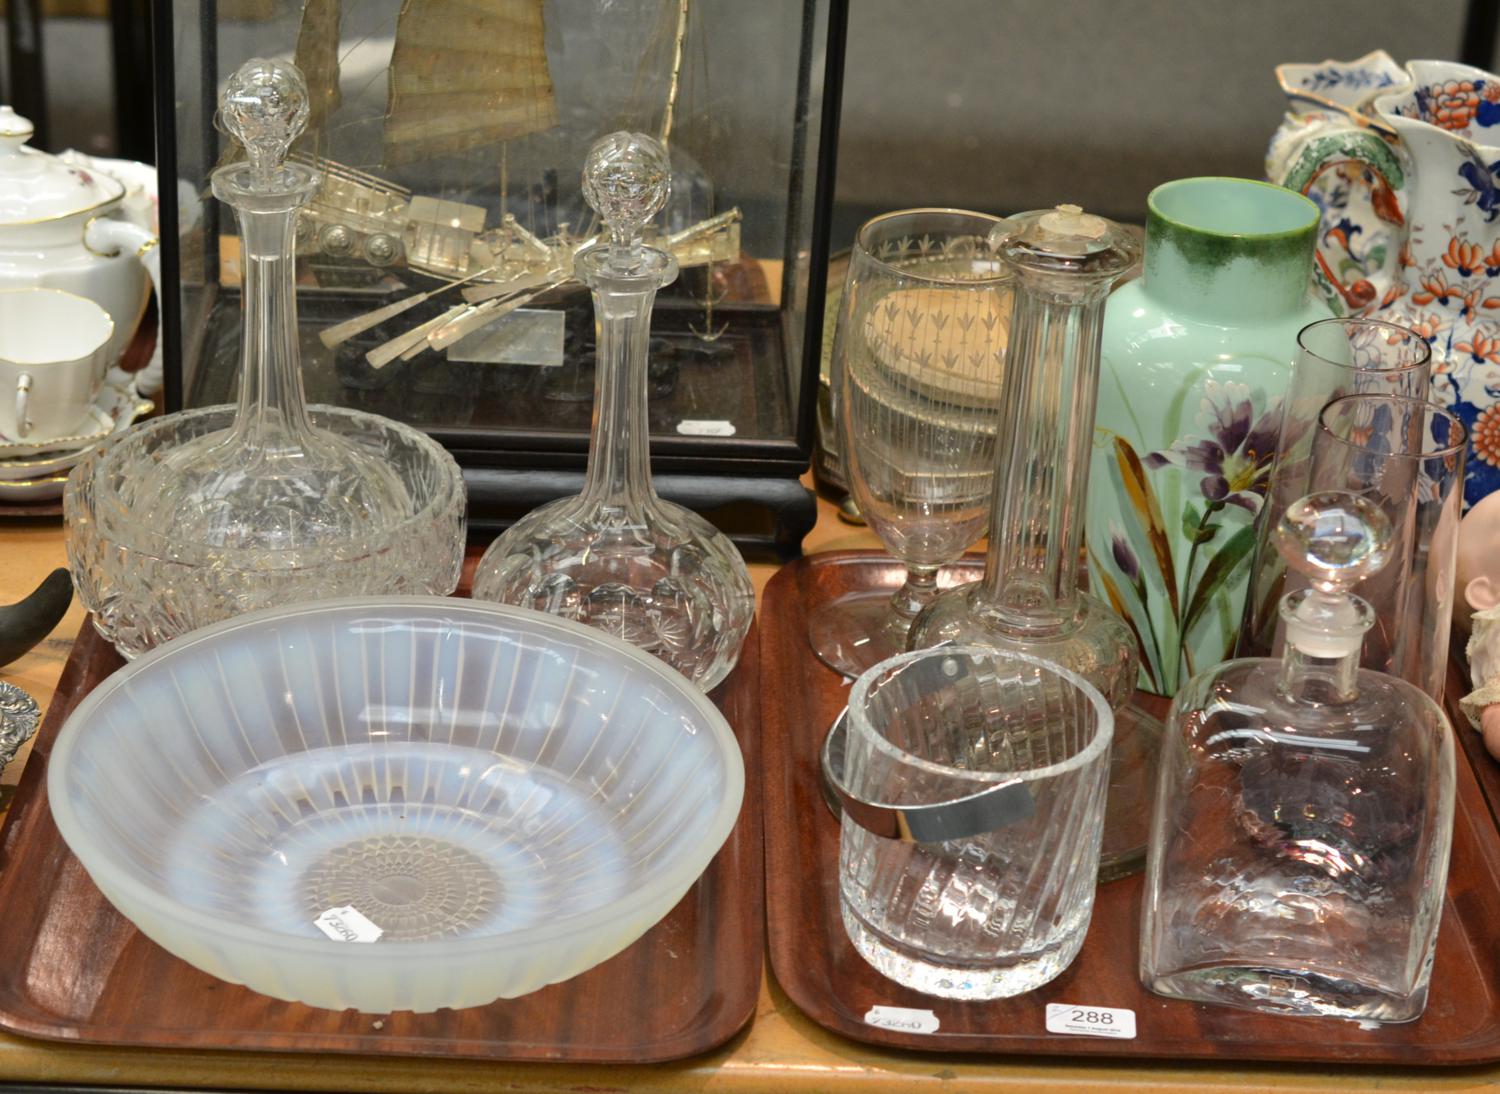 Celery glass vase, glass lamp base, Dartington glass decanter and stopper, two purple glass vases